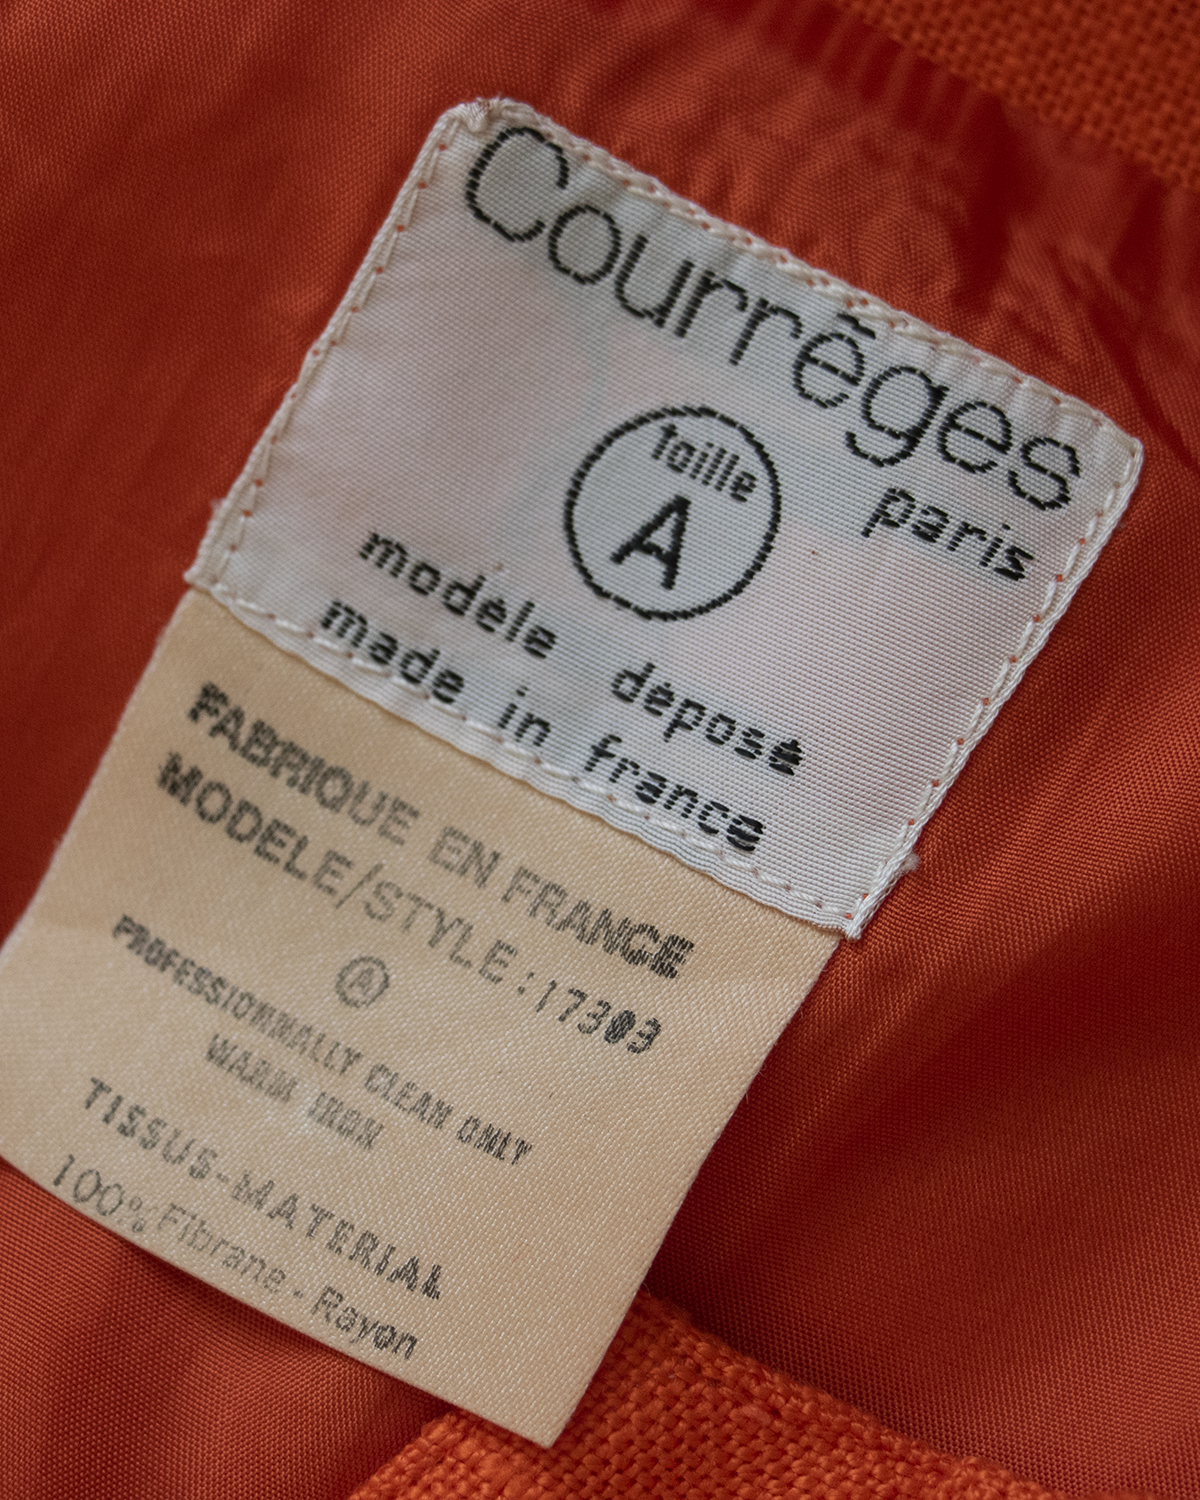 André Courrèges - Orange Dress from 1970s